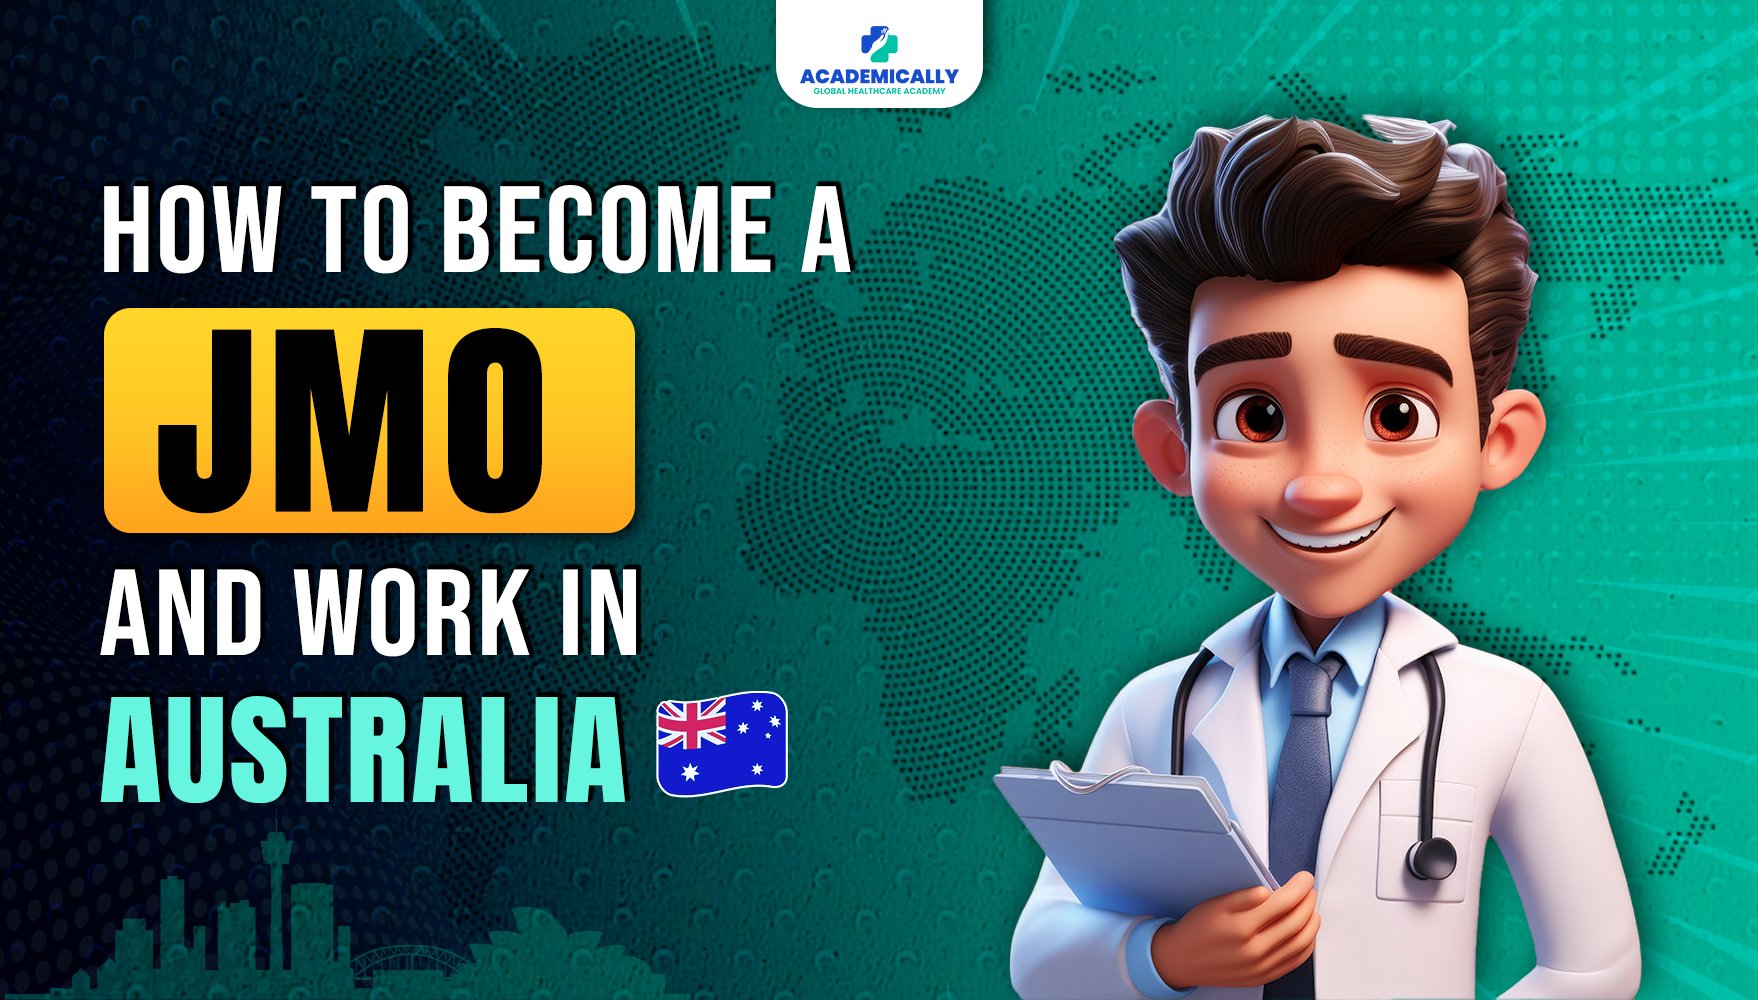 JMO and Work In Australia